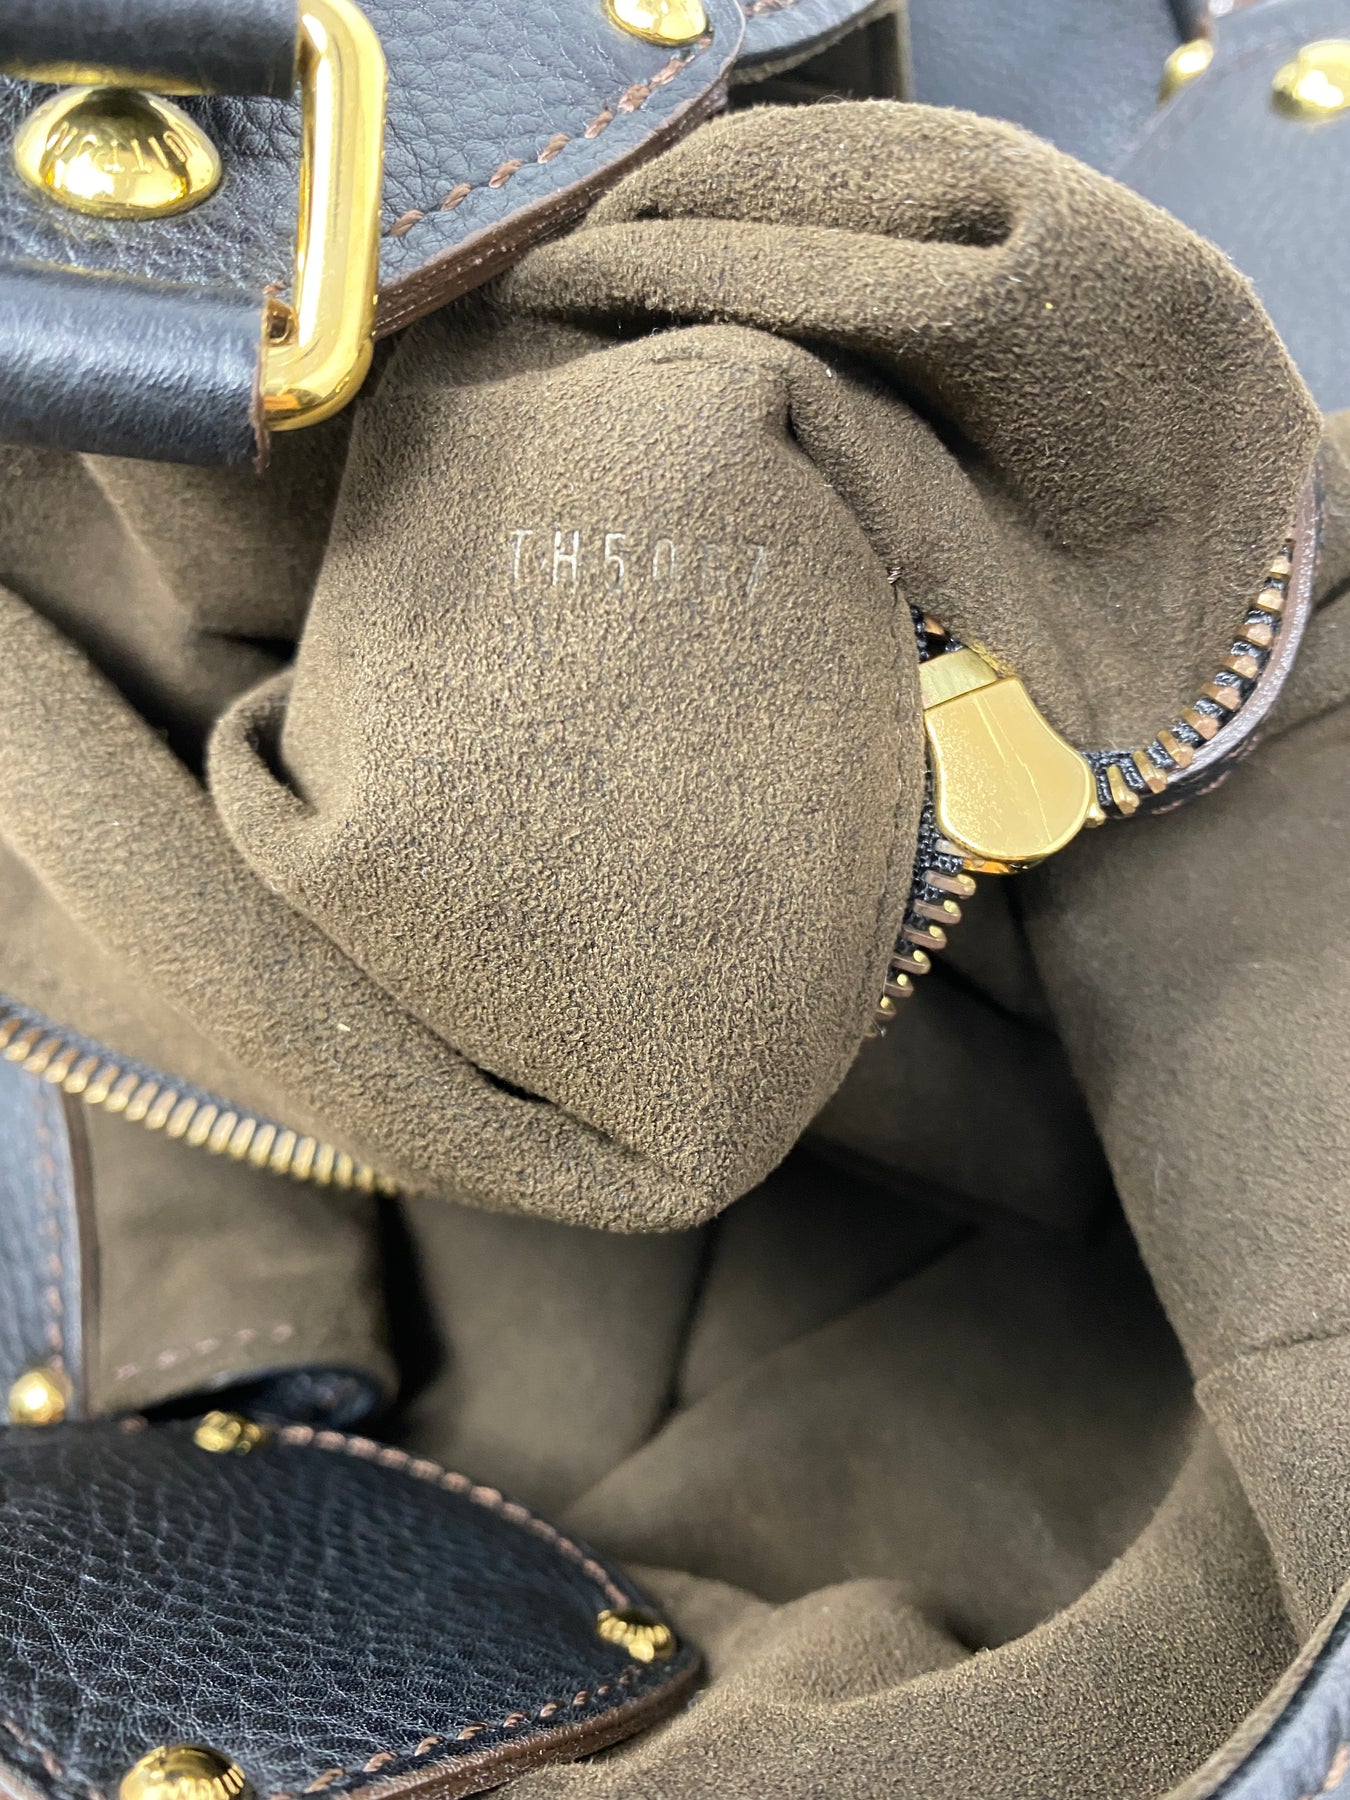 Mahina leather handbag Louis Vuitton Black in Leather - 20963791